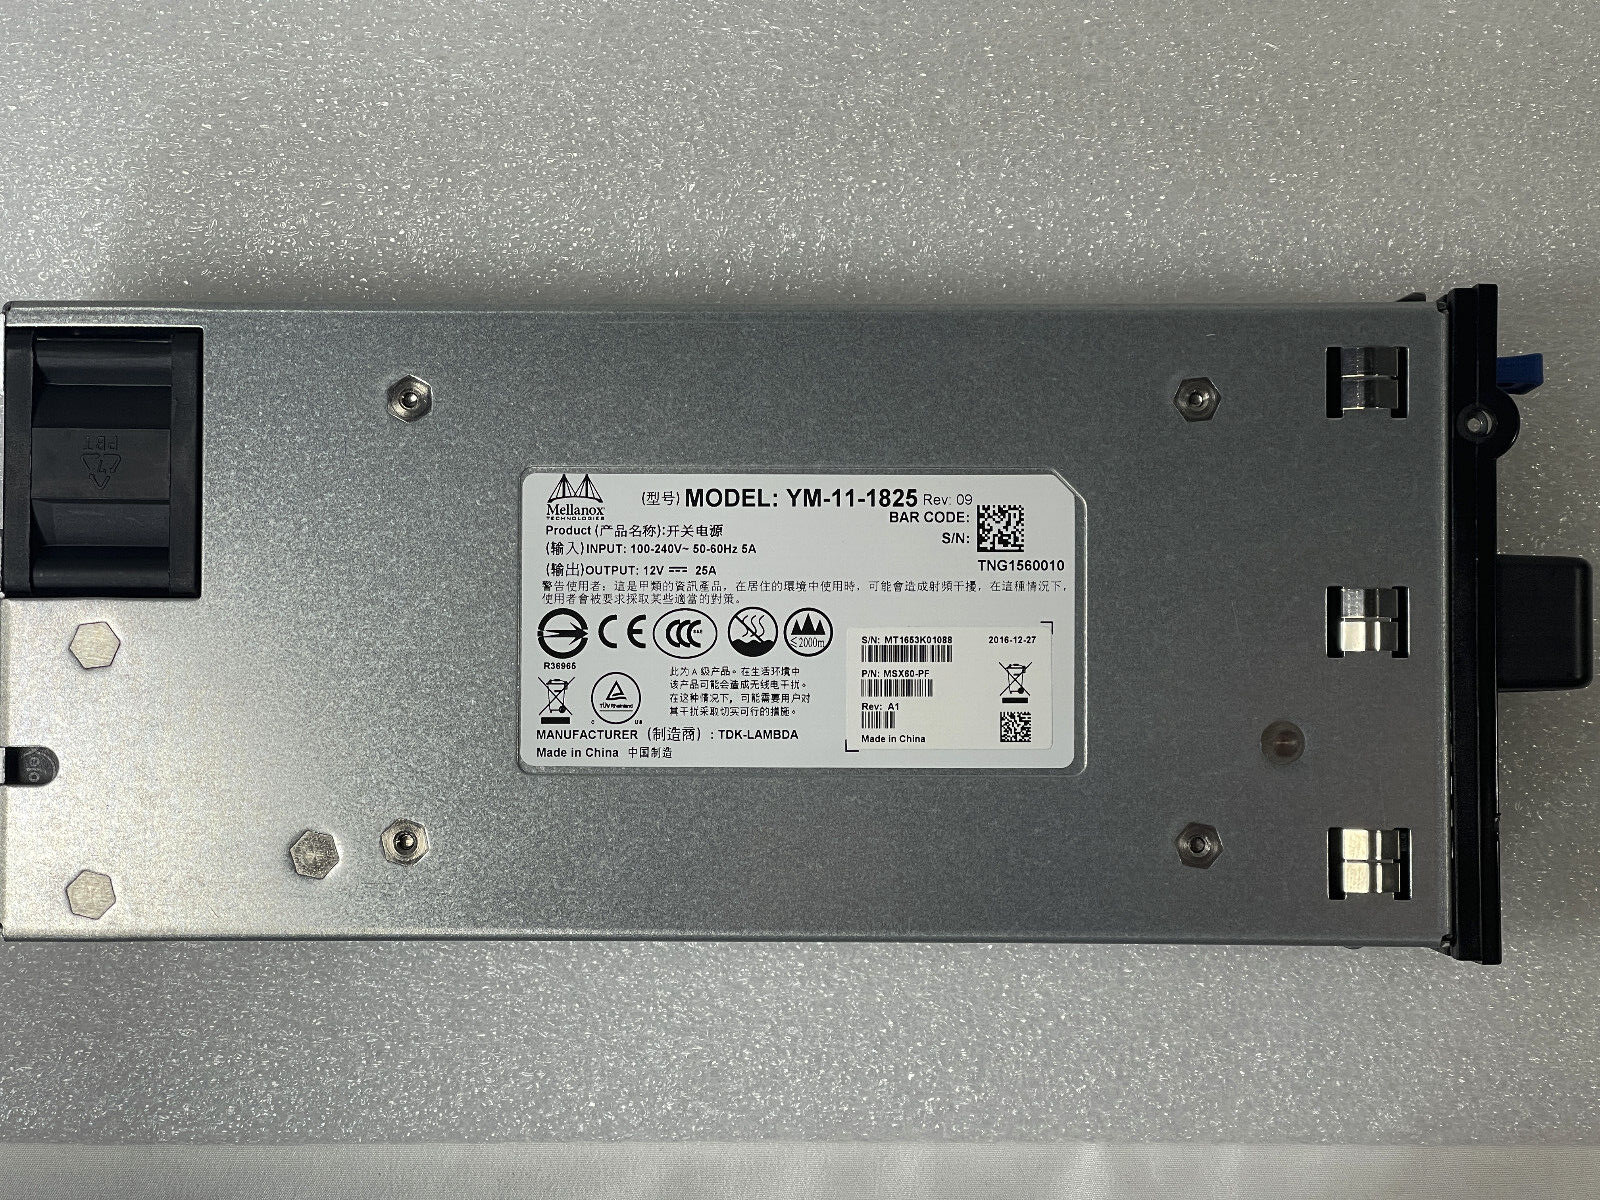 Mellanox SX6025 36-Port Non-blocking 56Gb/s FDR InfiniBand Switch 1x PSU Rails MSX6025F-1SFS.